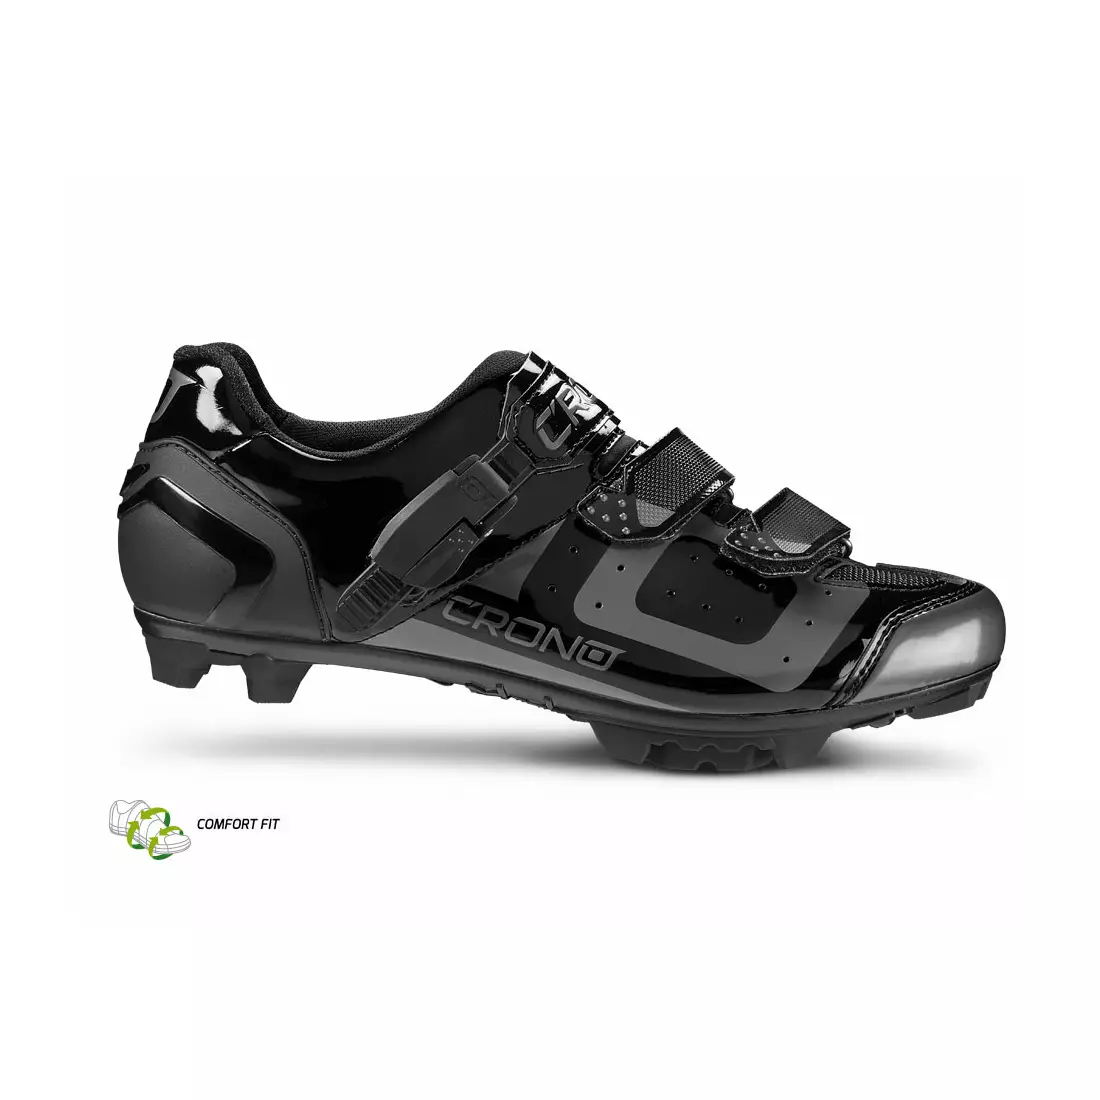 CRONO CX3 nylon - MTB cycling shoes, black